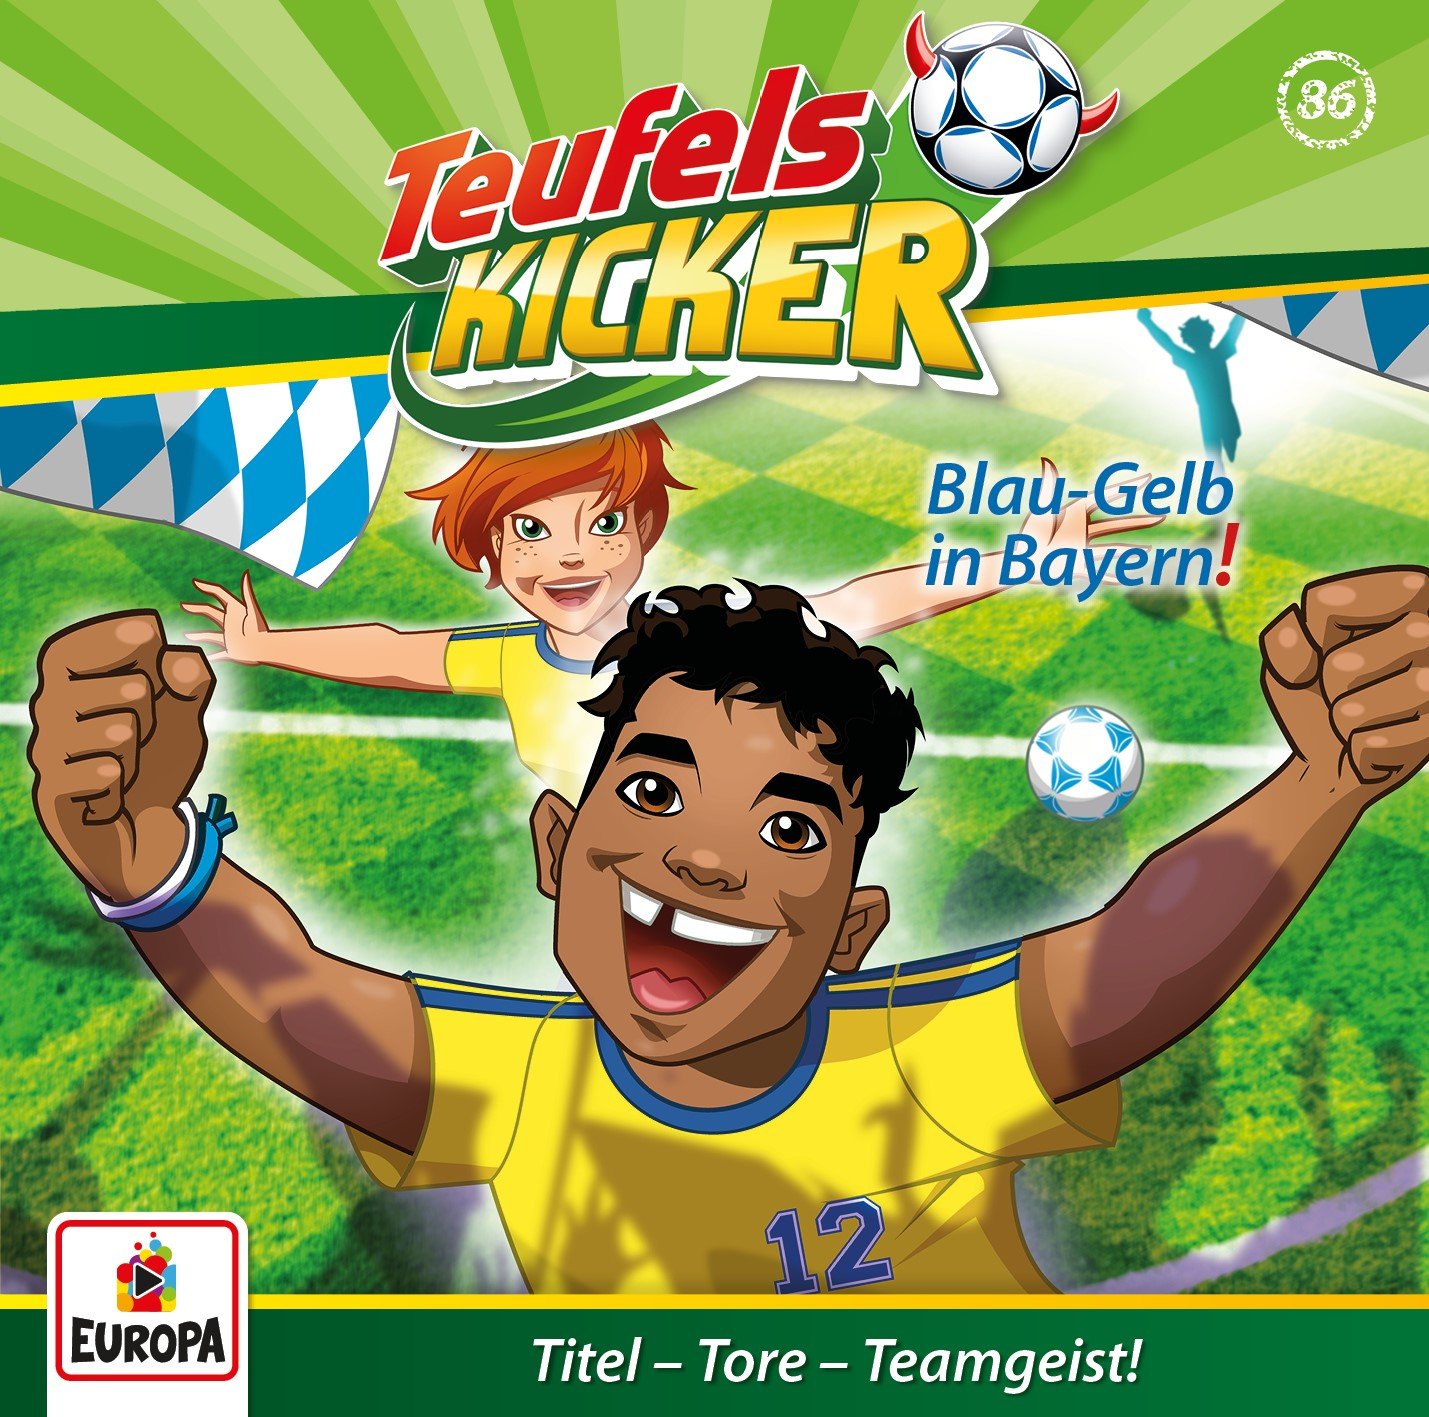 Teufelskicker  - Blau-Gelb in Bayern!